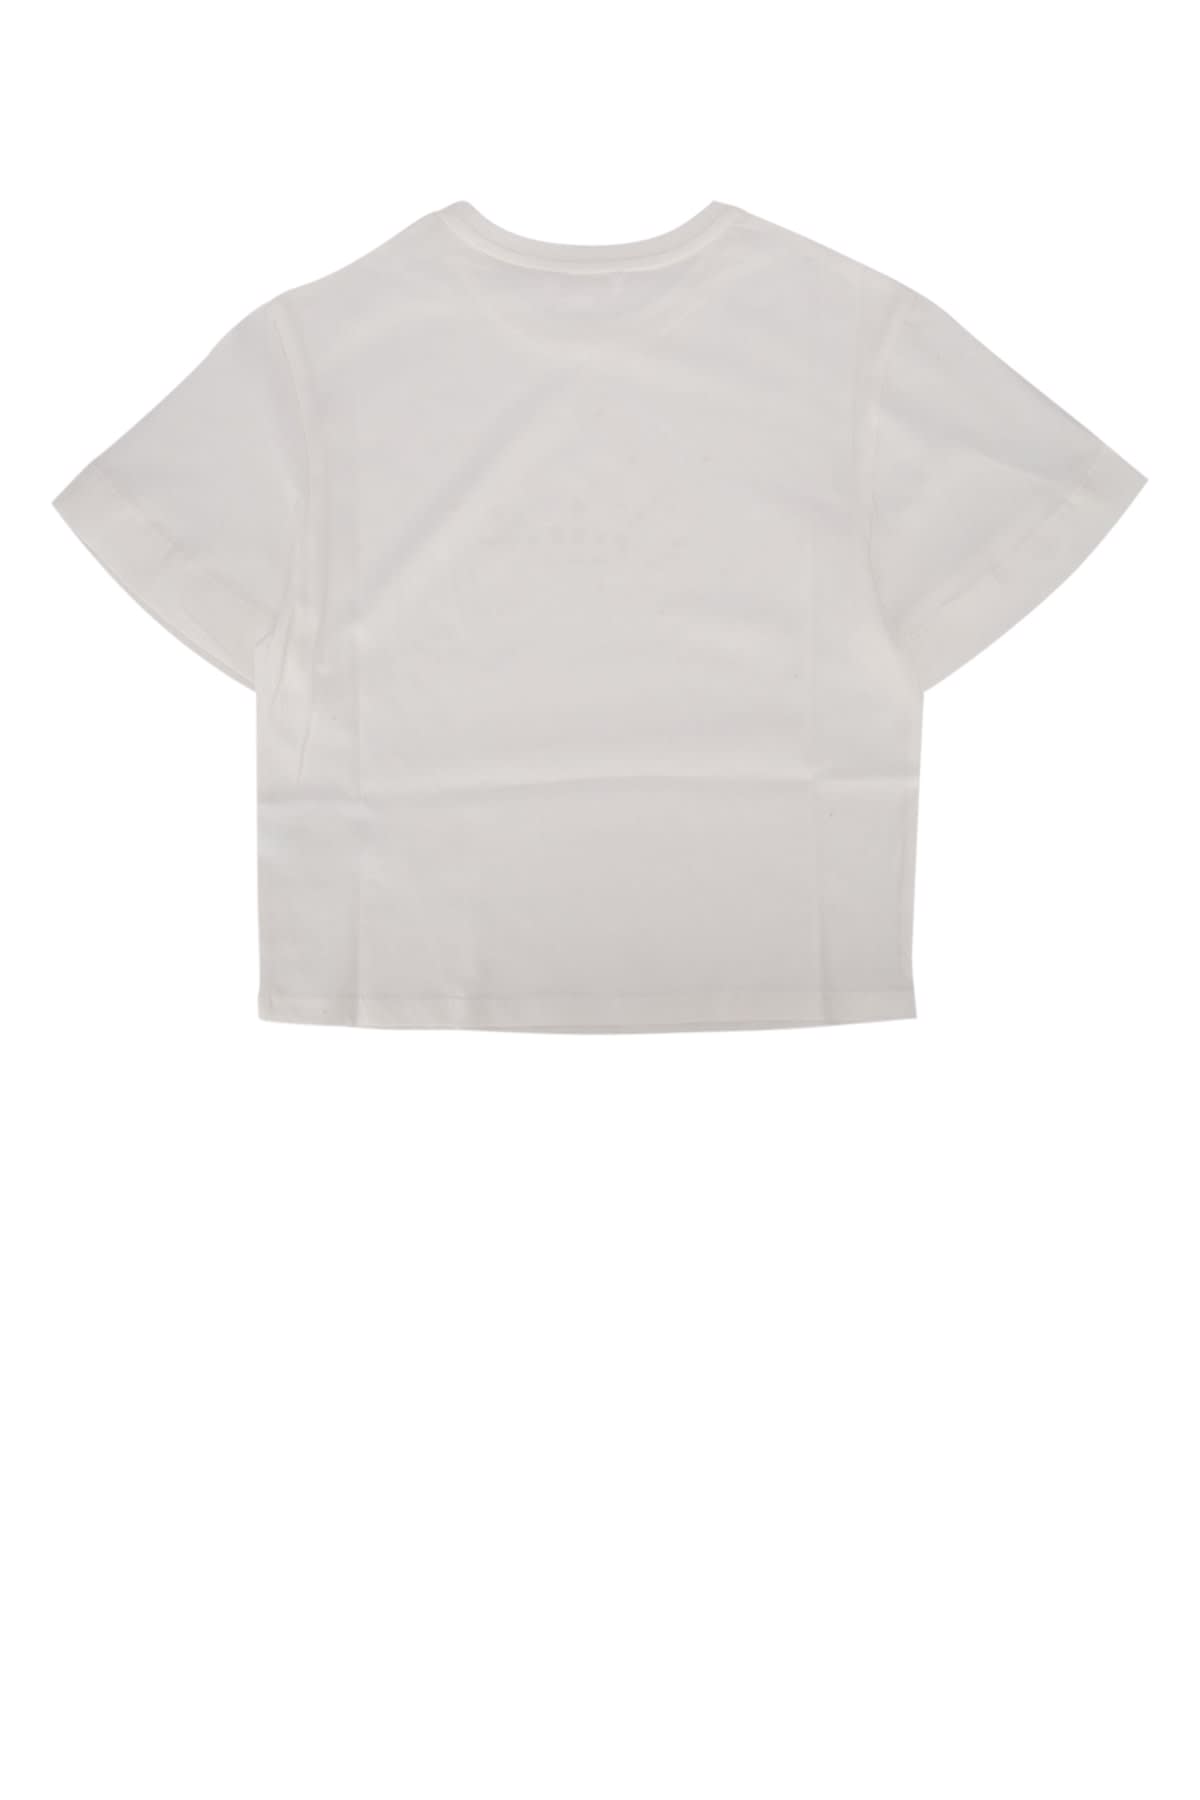 Chloé Kids' T-shirt In Biancosporco